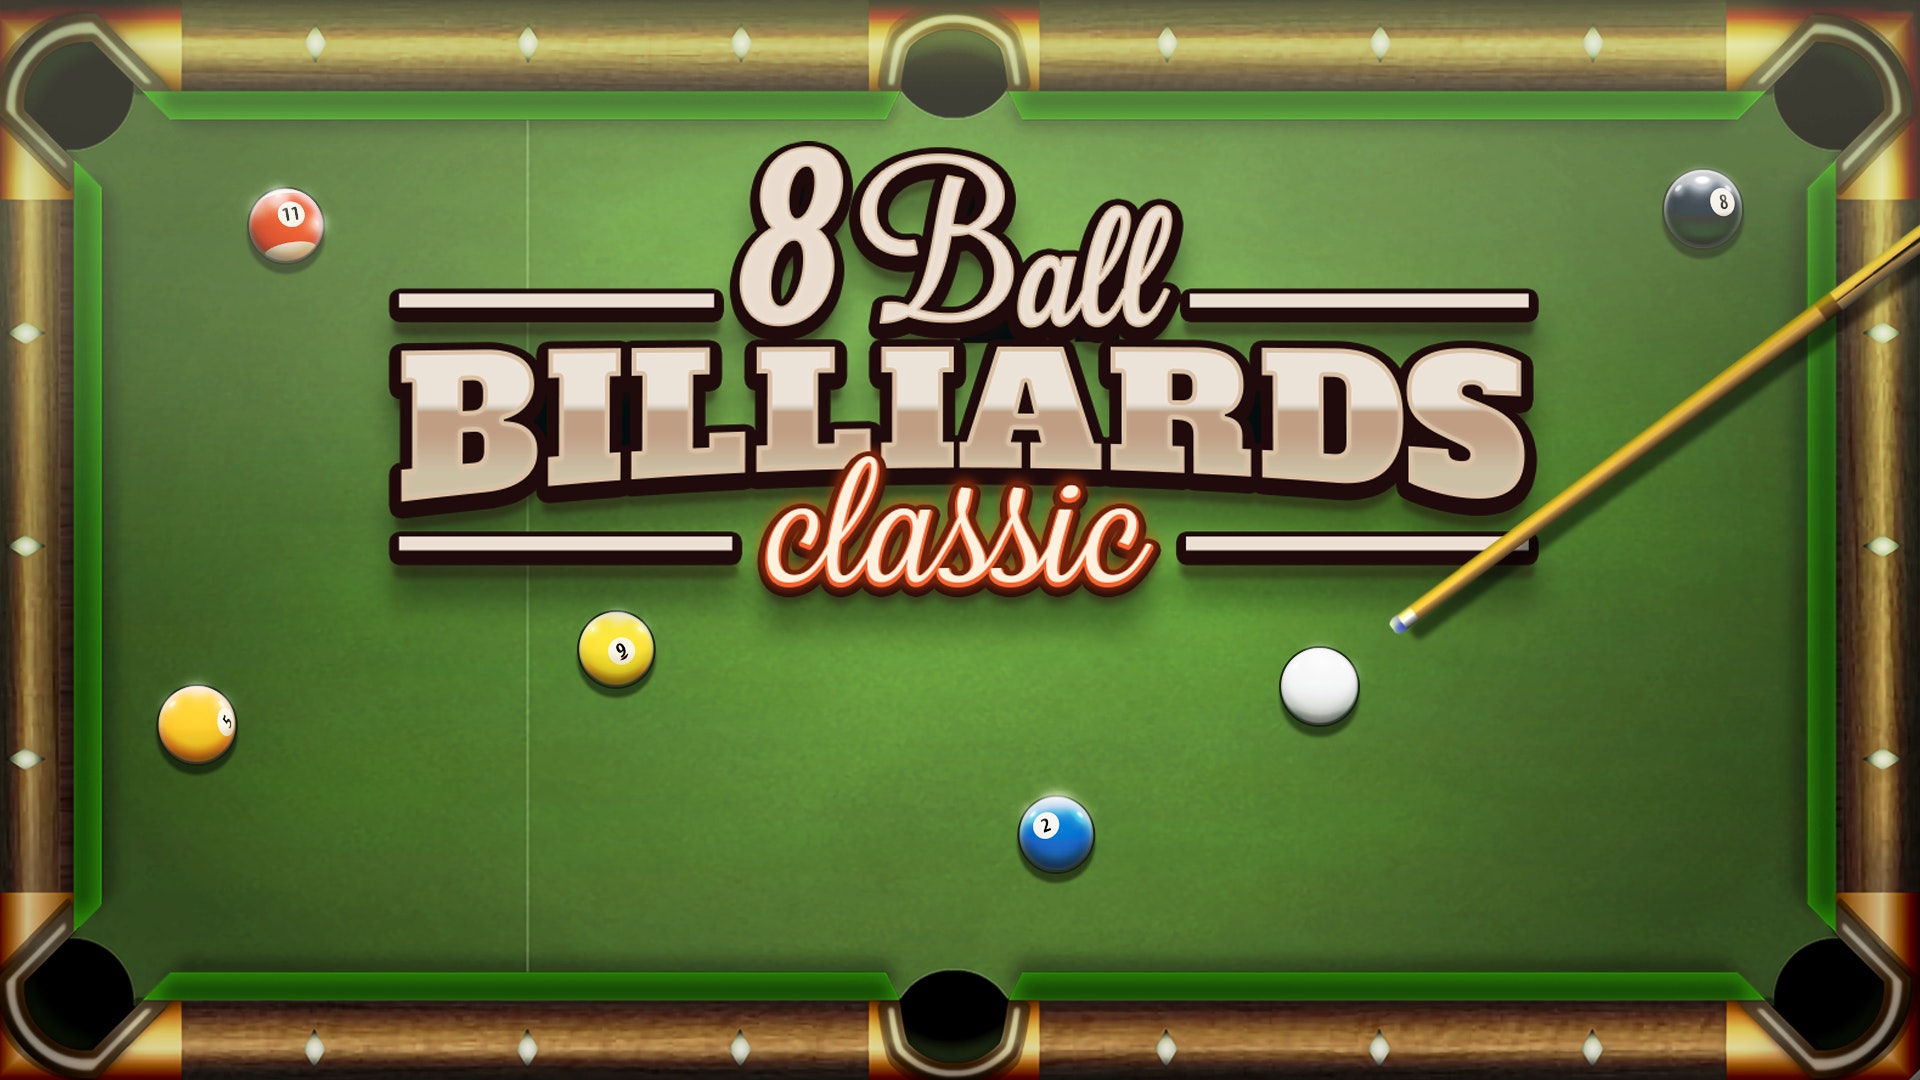 8 Ball Pool - Unblocked at Cool Math Games